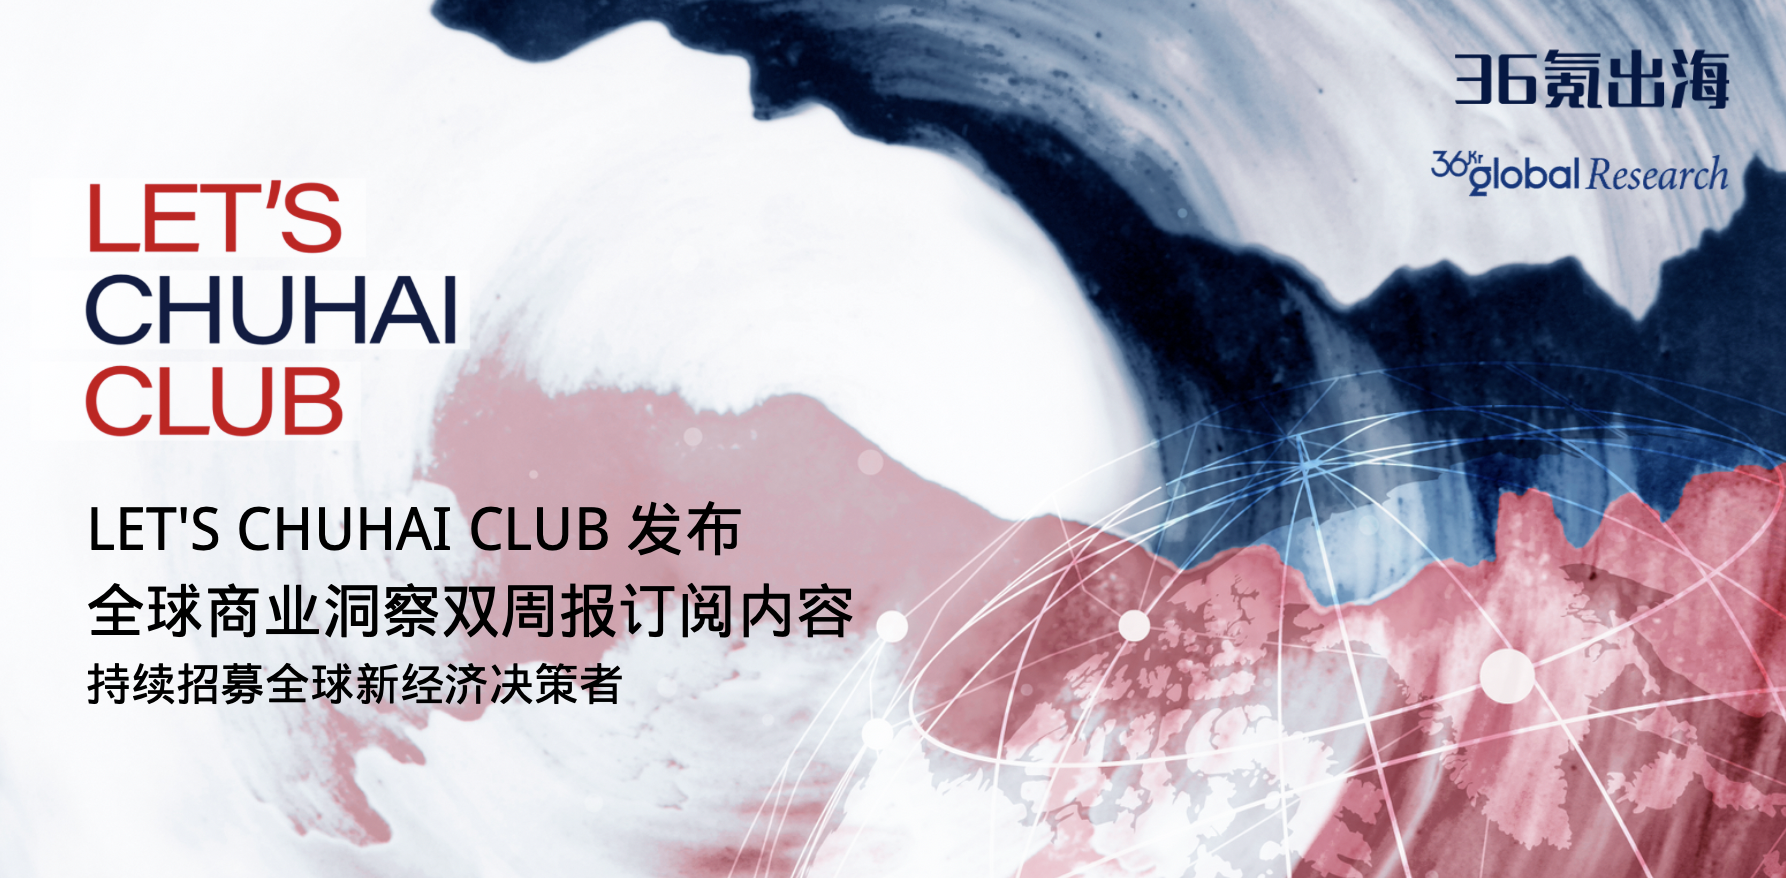 LET’S CHUHAI CLUB 发布《全球商业洞察双周报 Vol.7》订阅内容｜持续招募全球新经济决策者